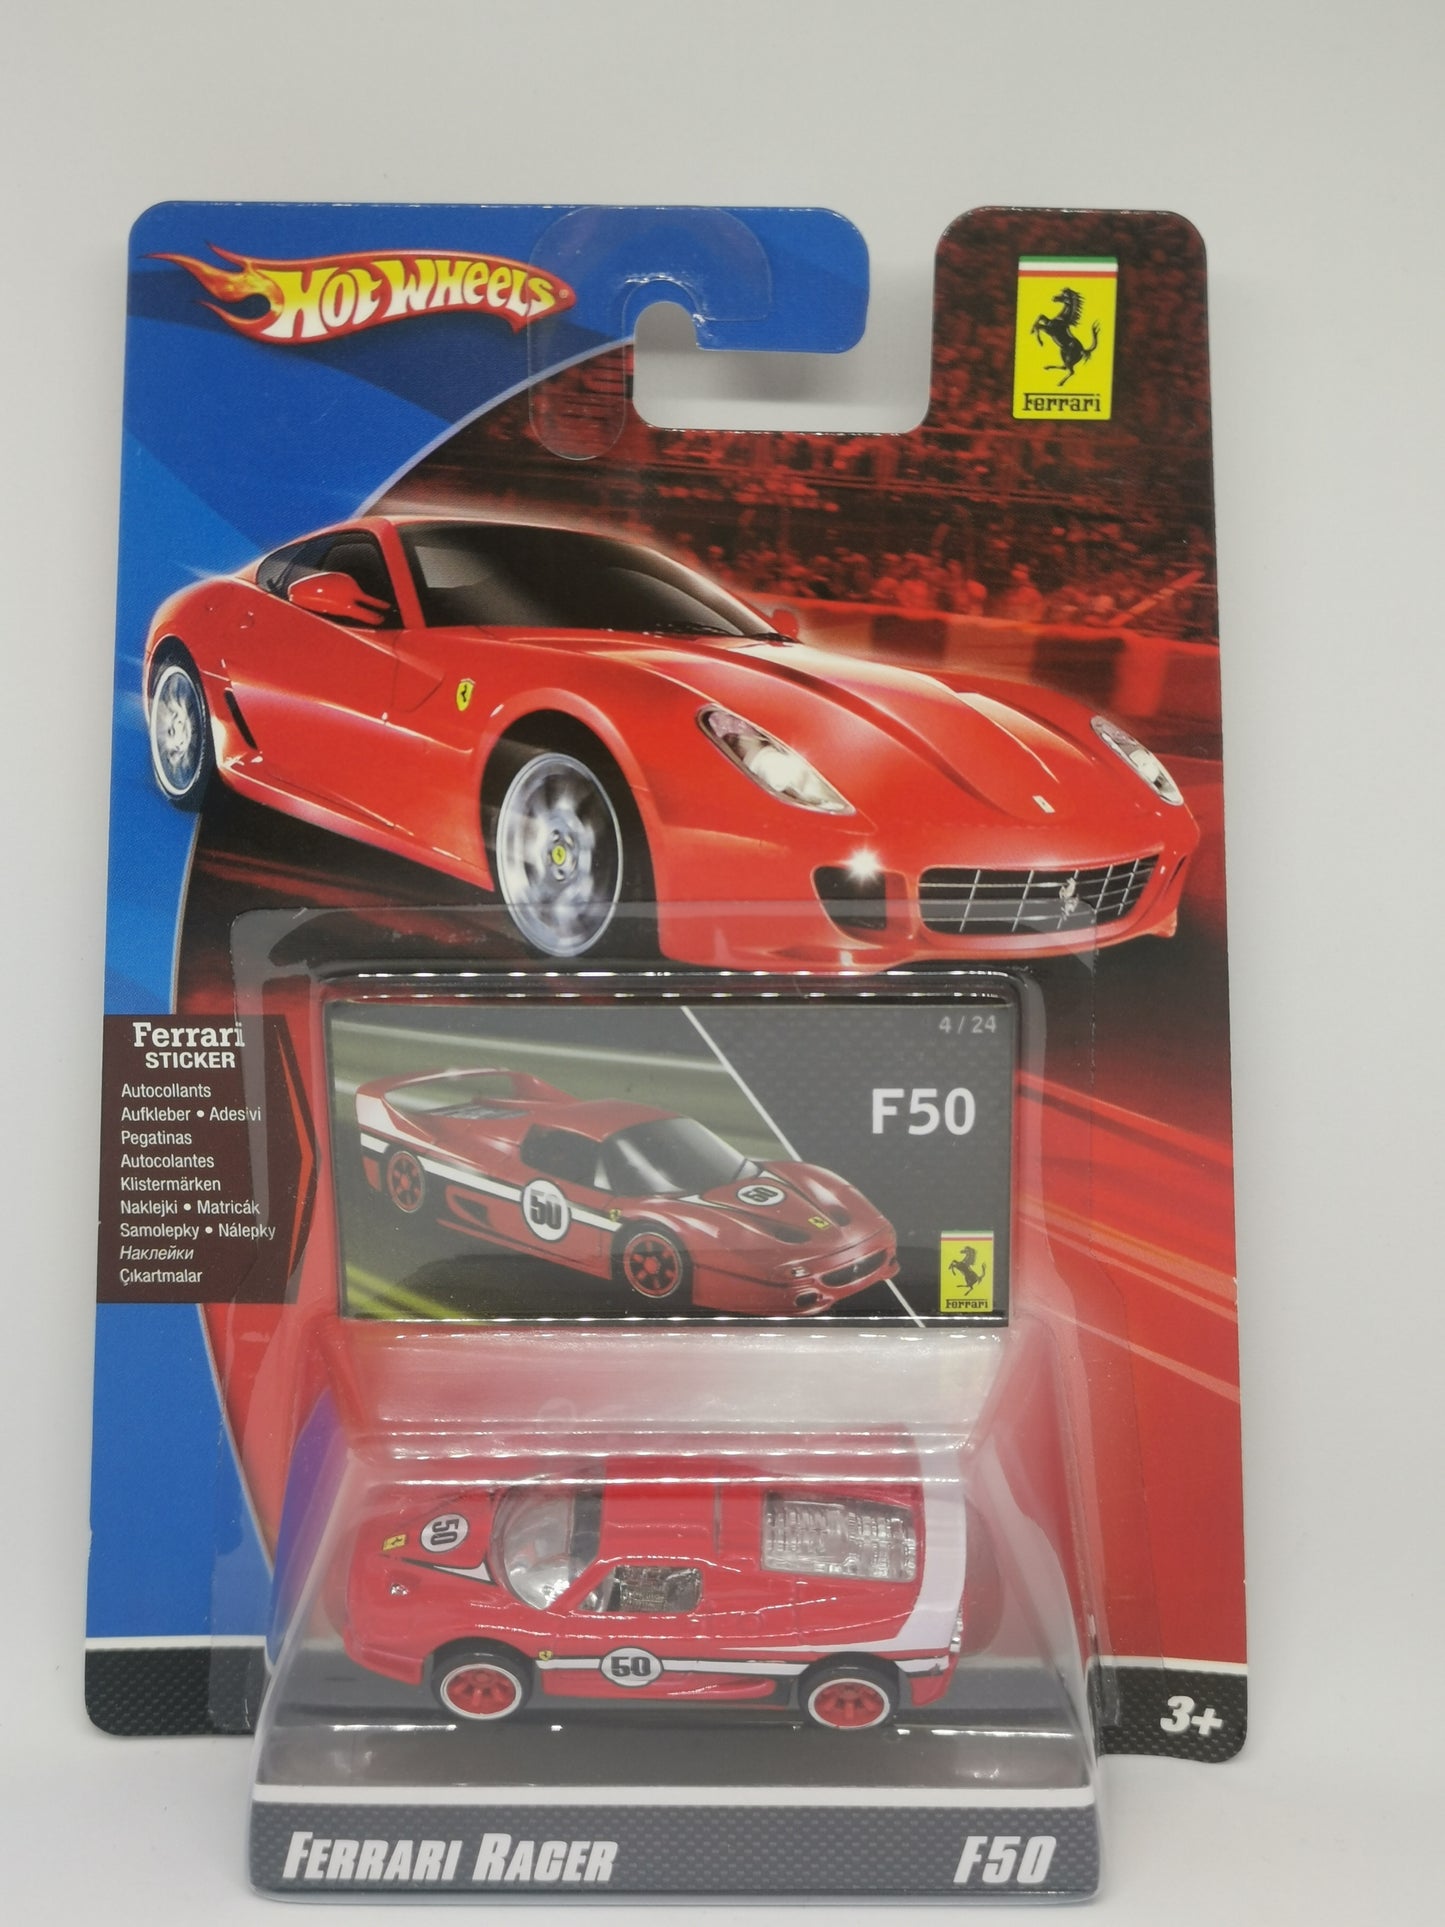 Hot Wheels Ferrari Racer F50